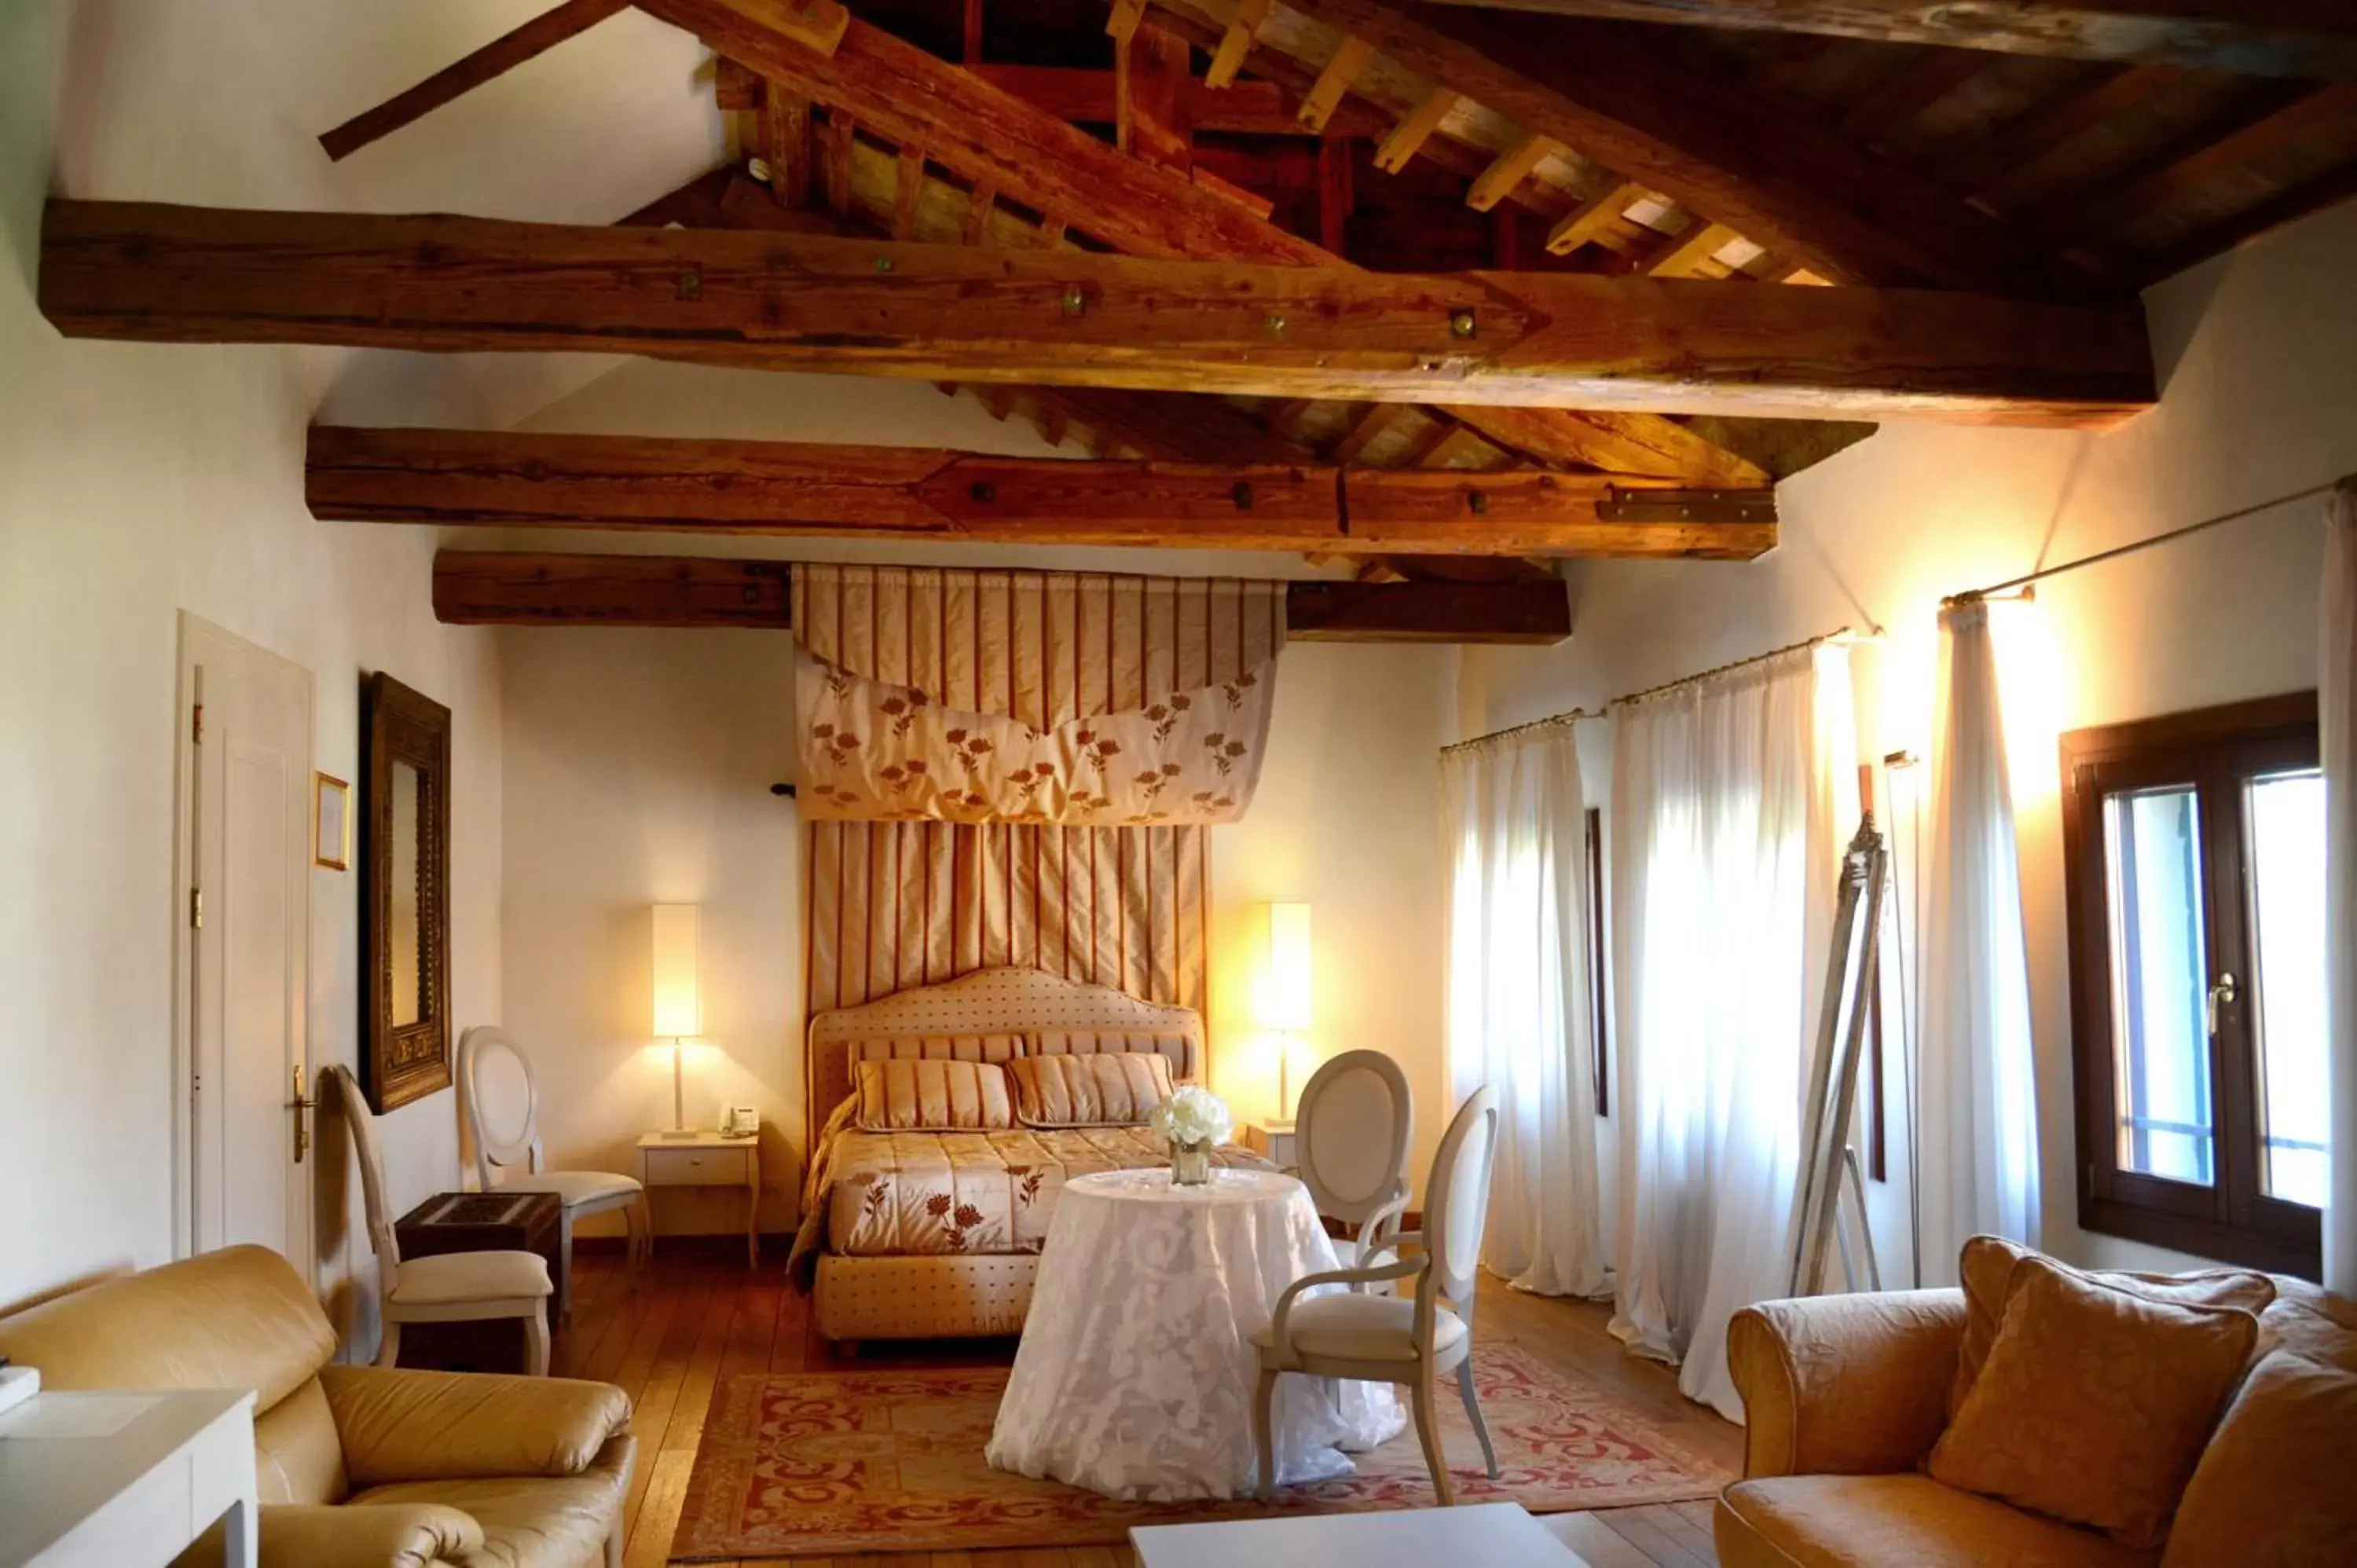 Photo of the whole room, Seating Area in Villa Foscarini Cornaro